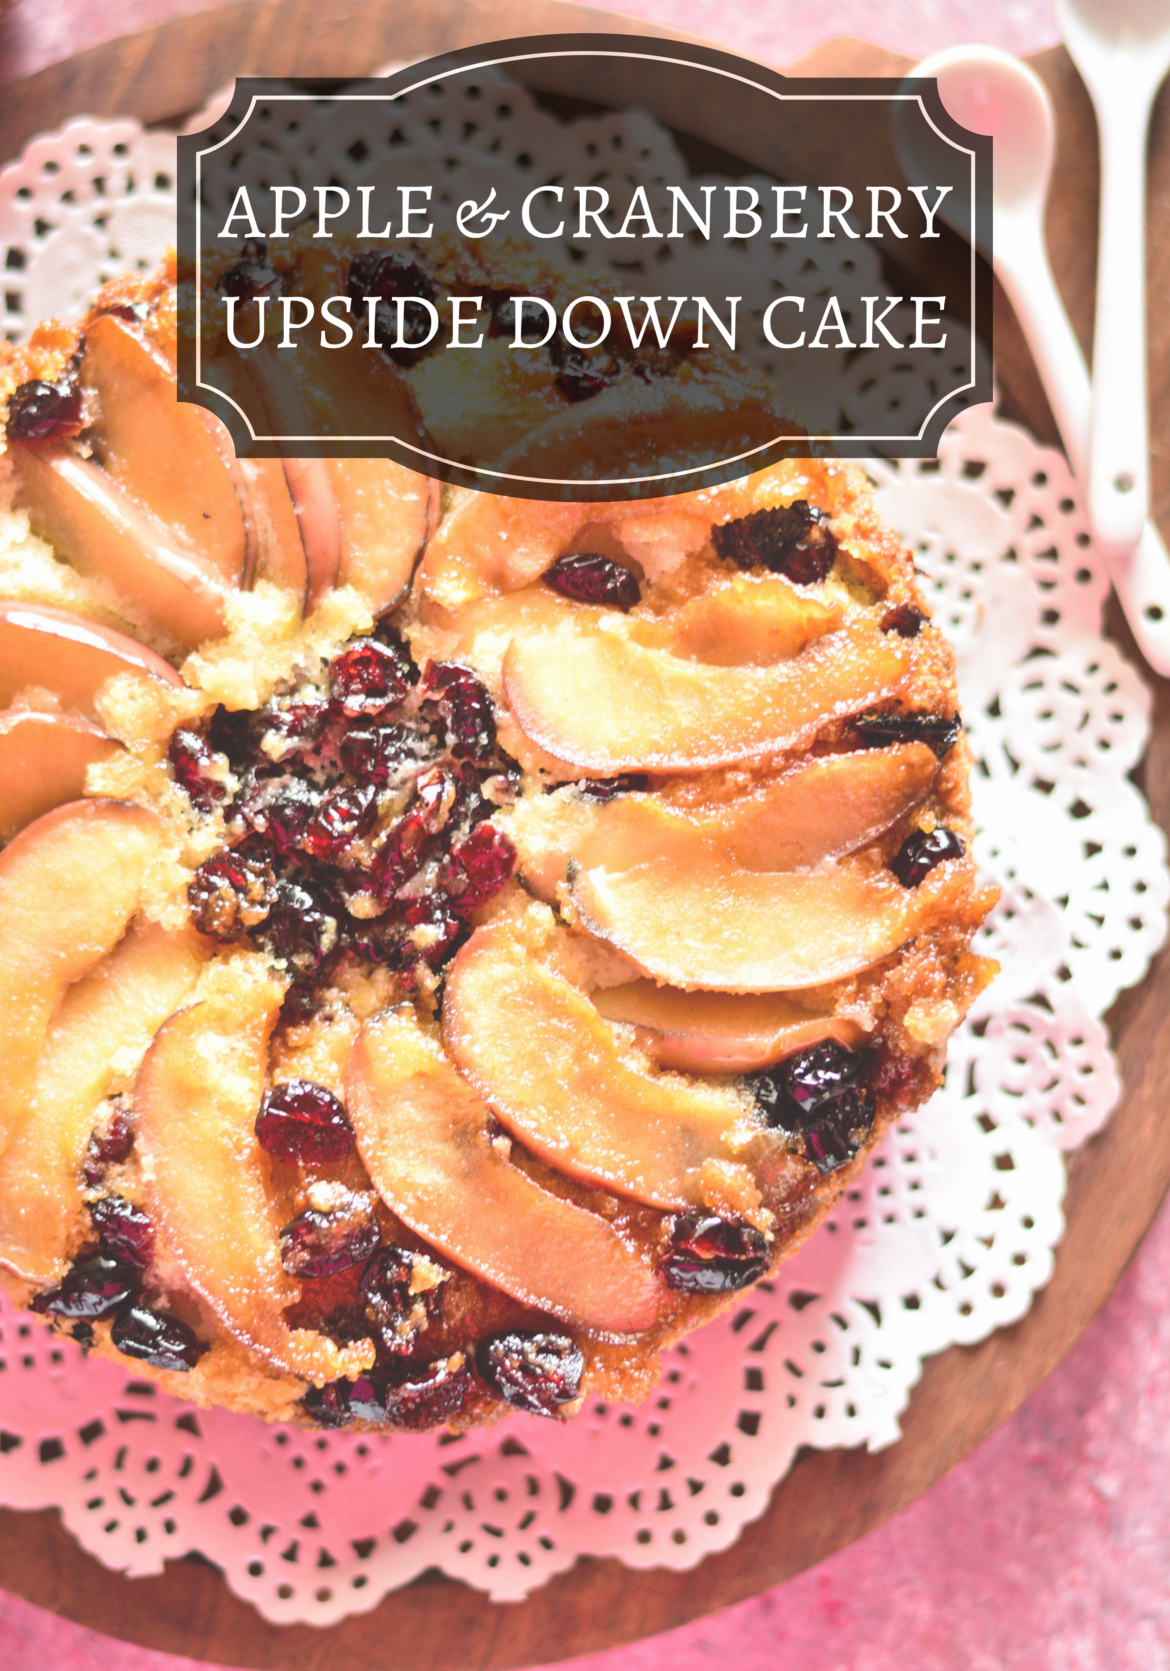 Apple & Cranberry Upside Down Cake